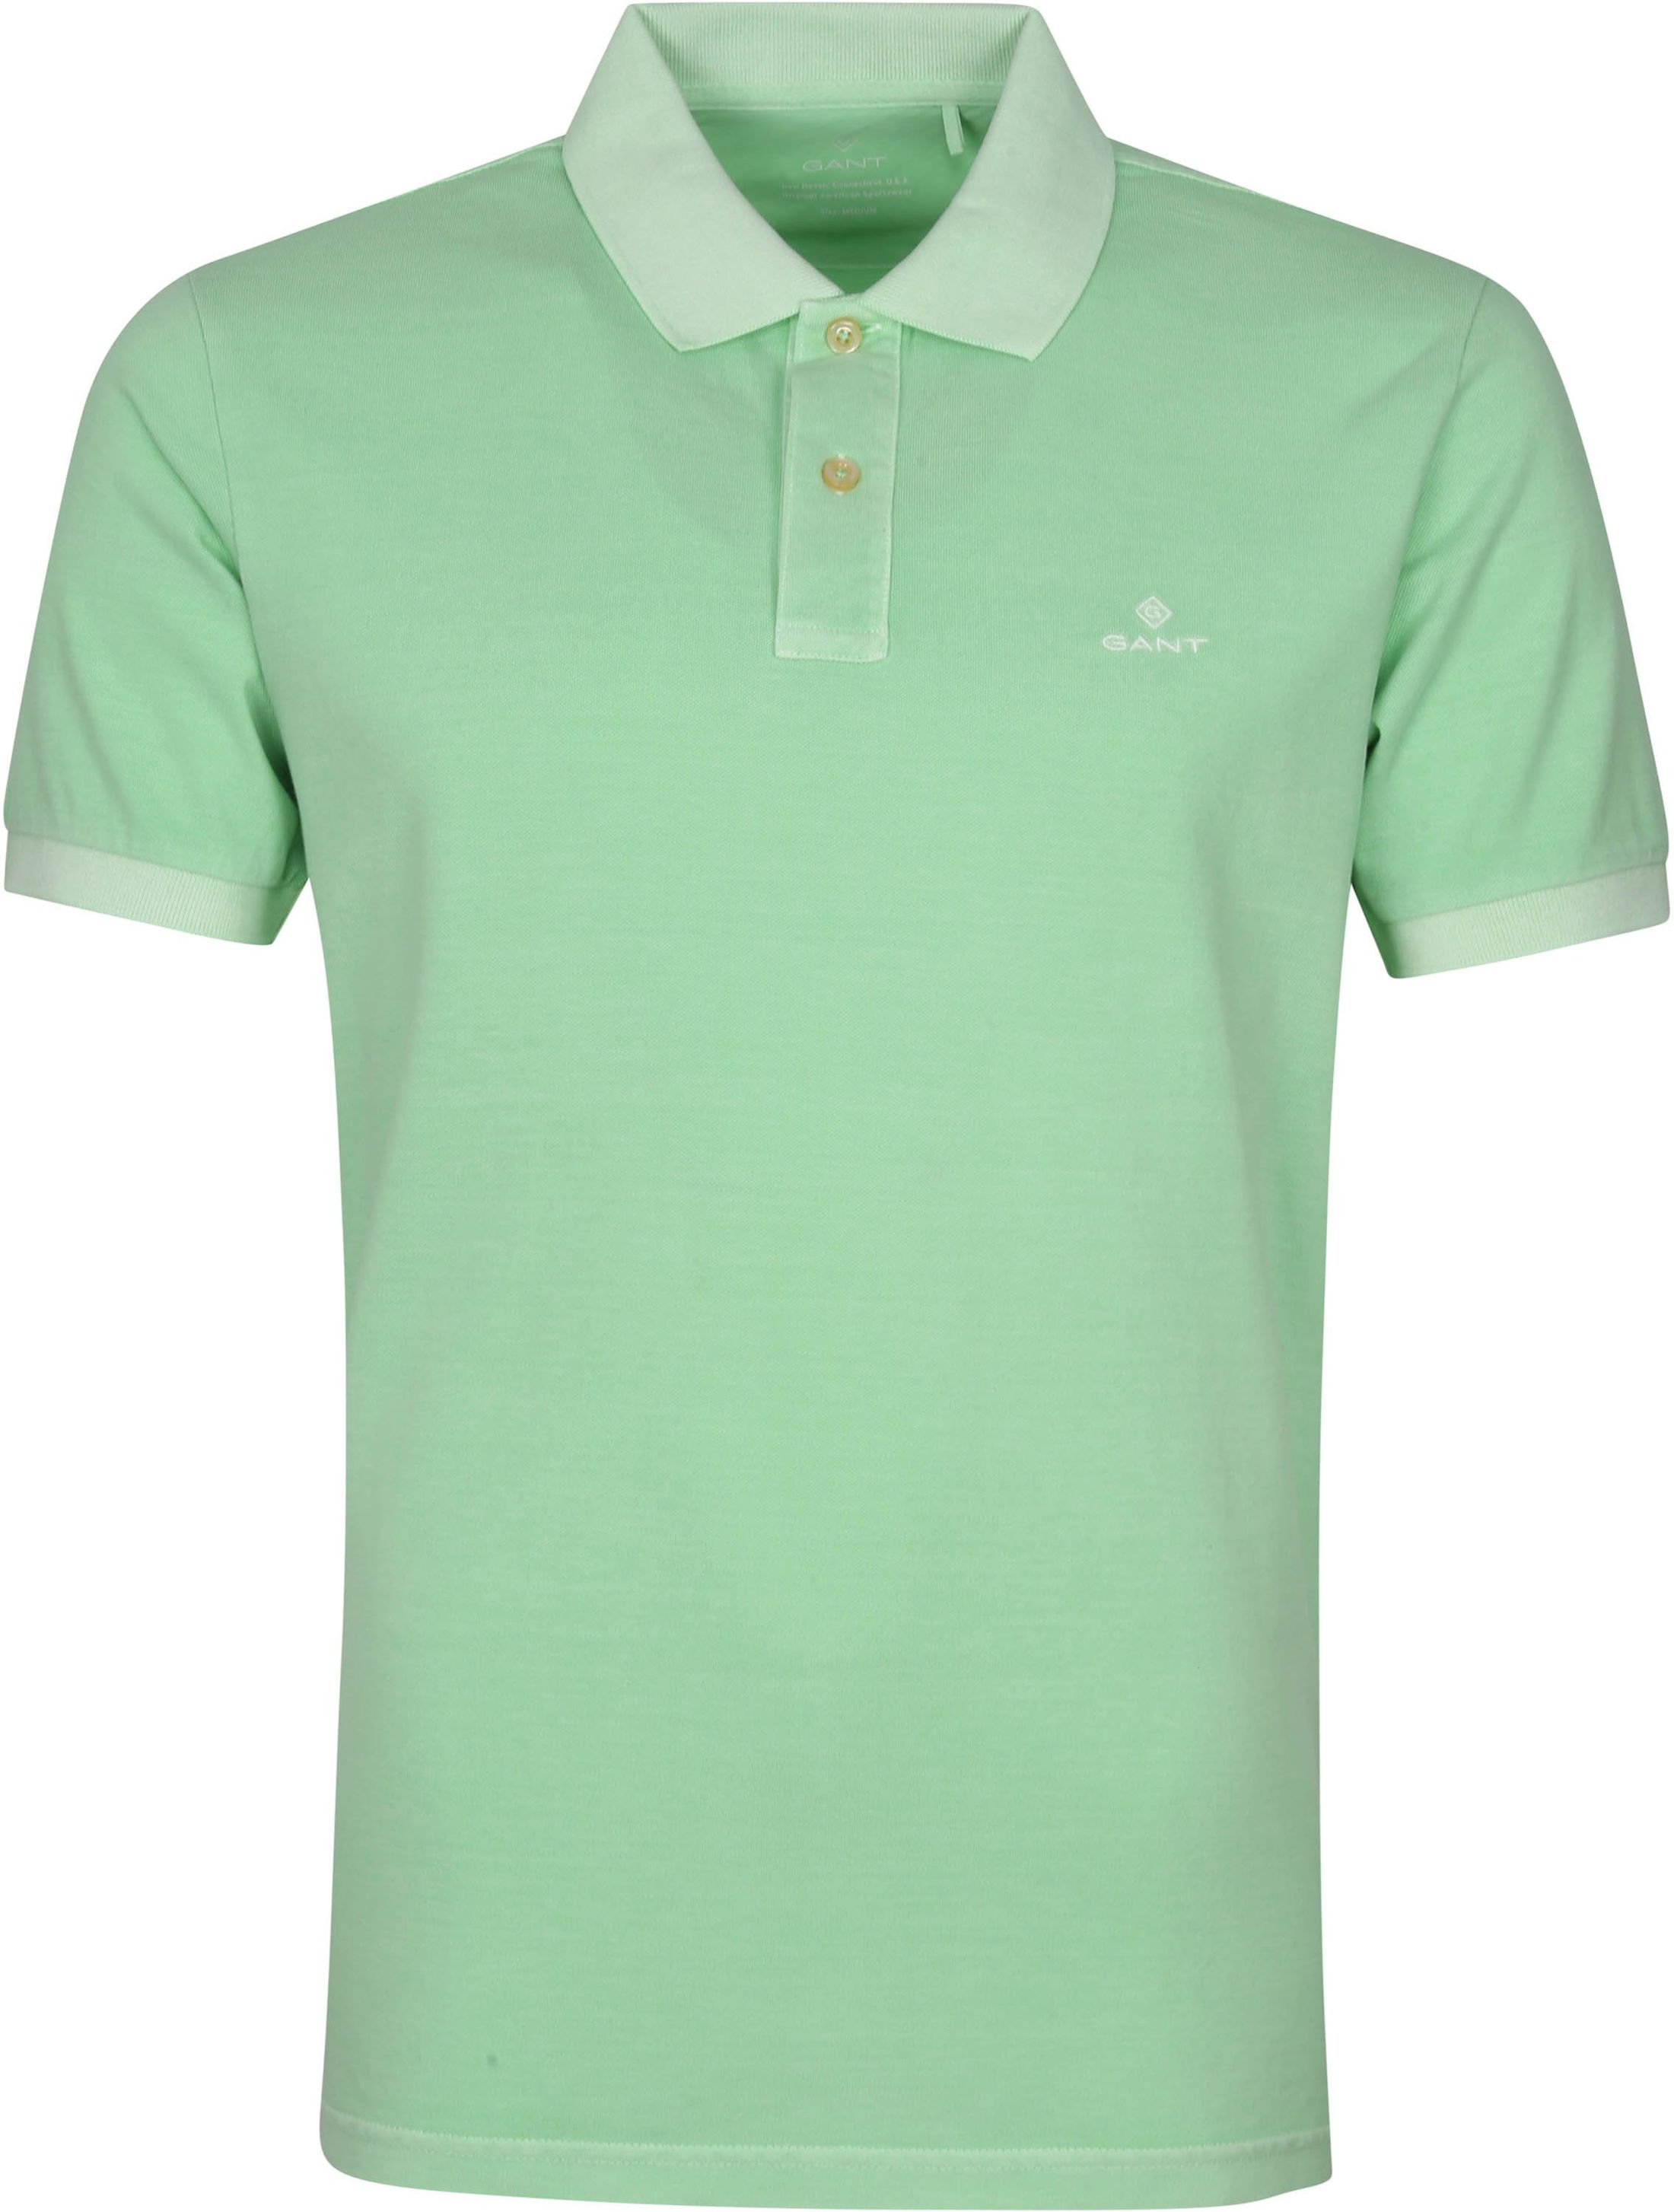 Gant Sunfaded Polo Shirt Green size L